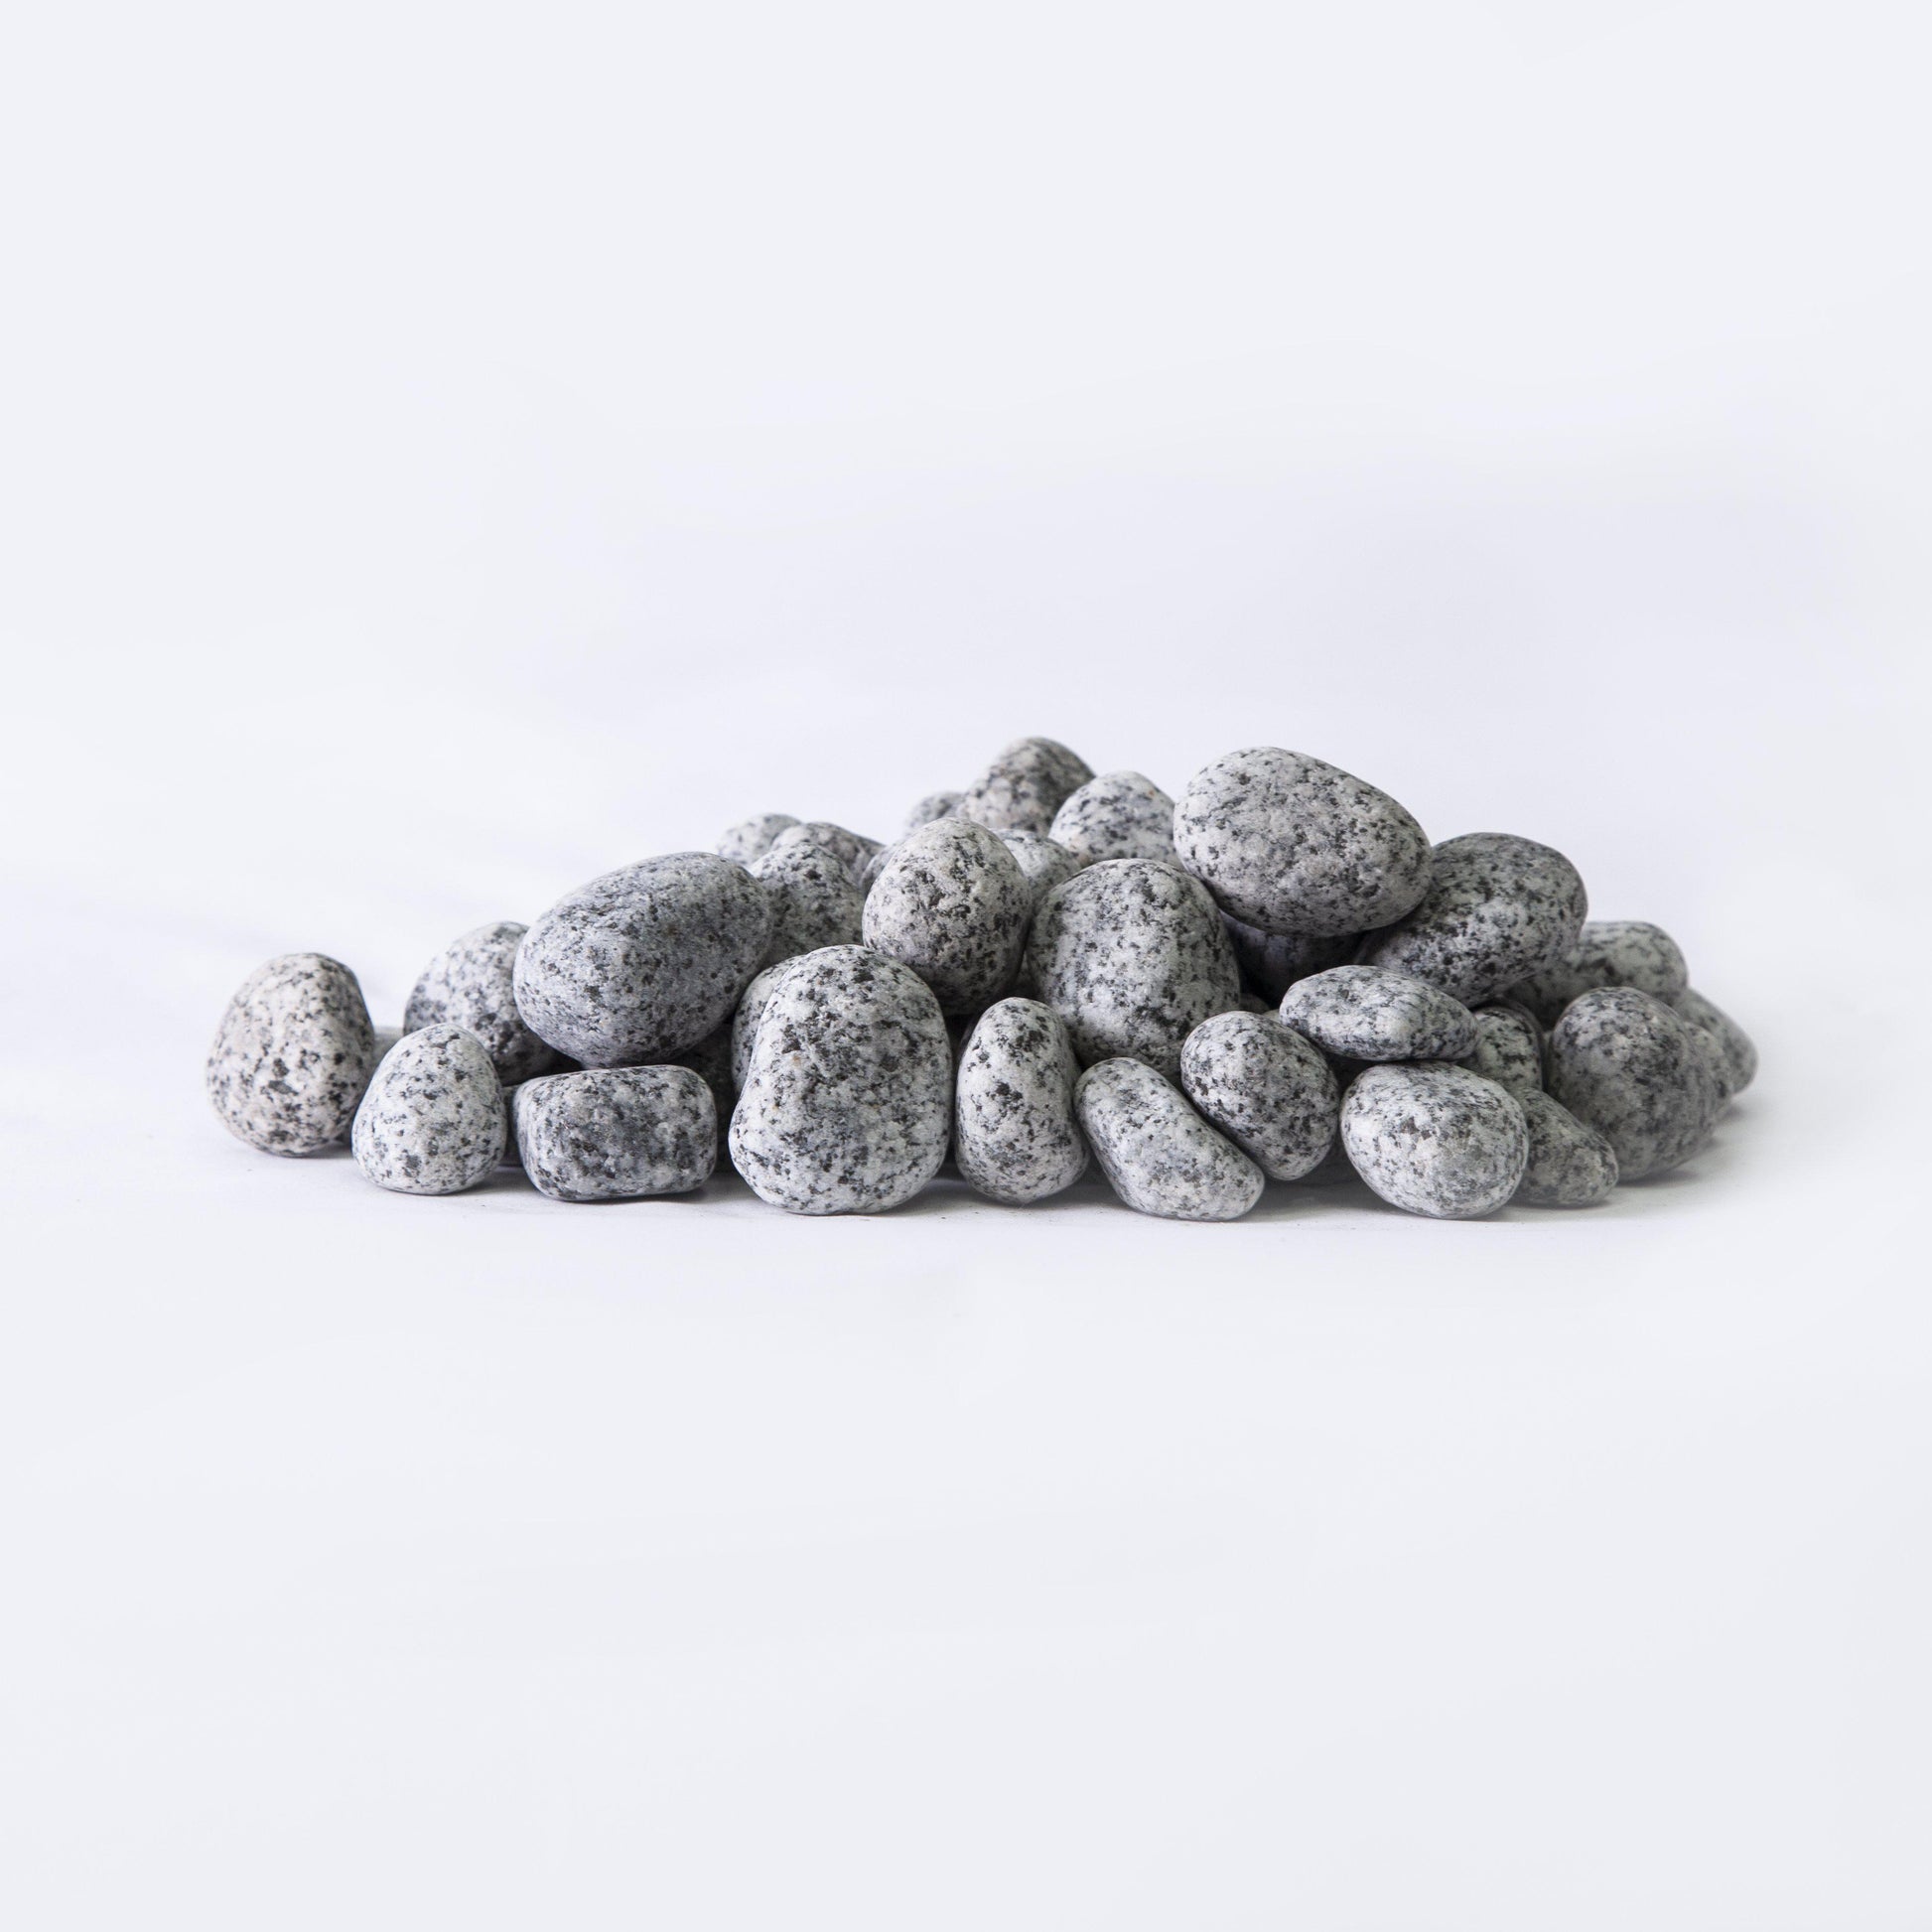 Silver Granite “Eggs” Cobbles - Pebbles-Pebble-stones4gardens-stones4gardens